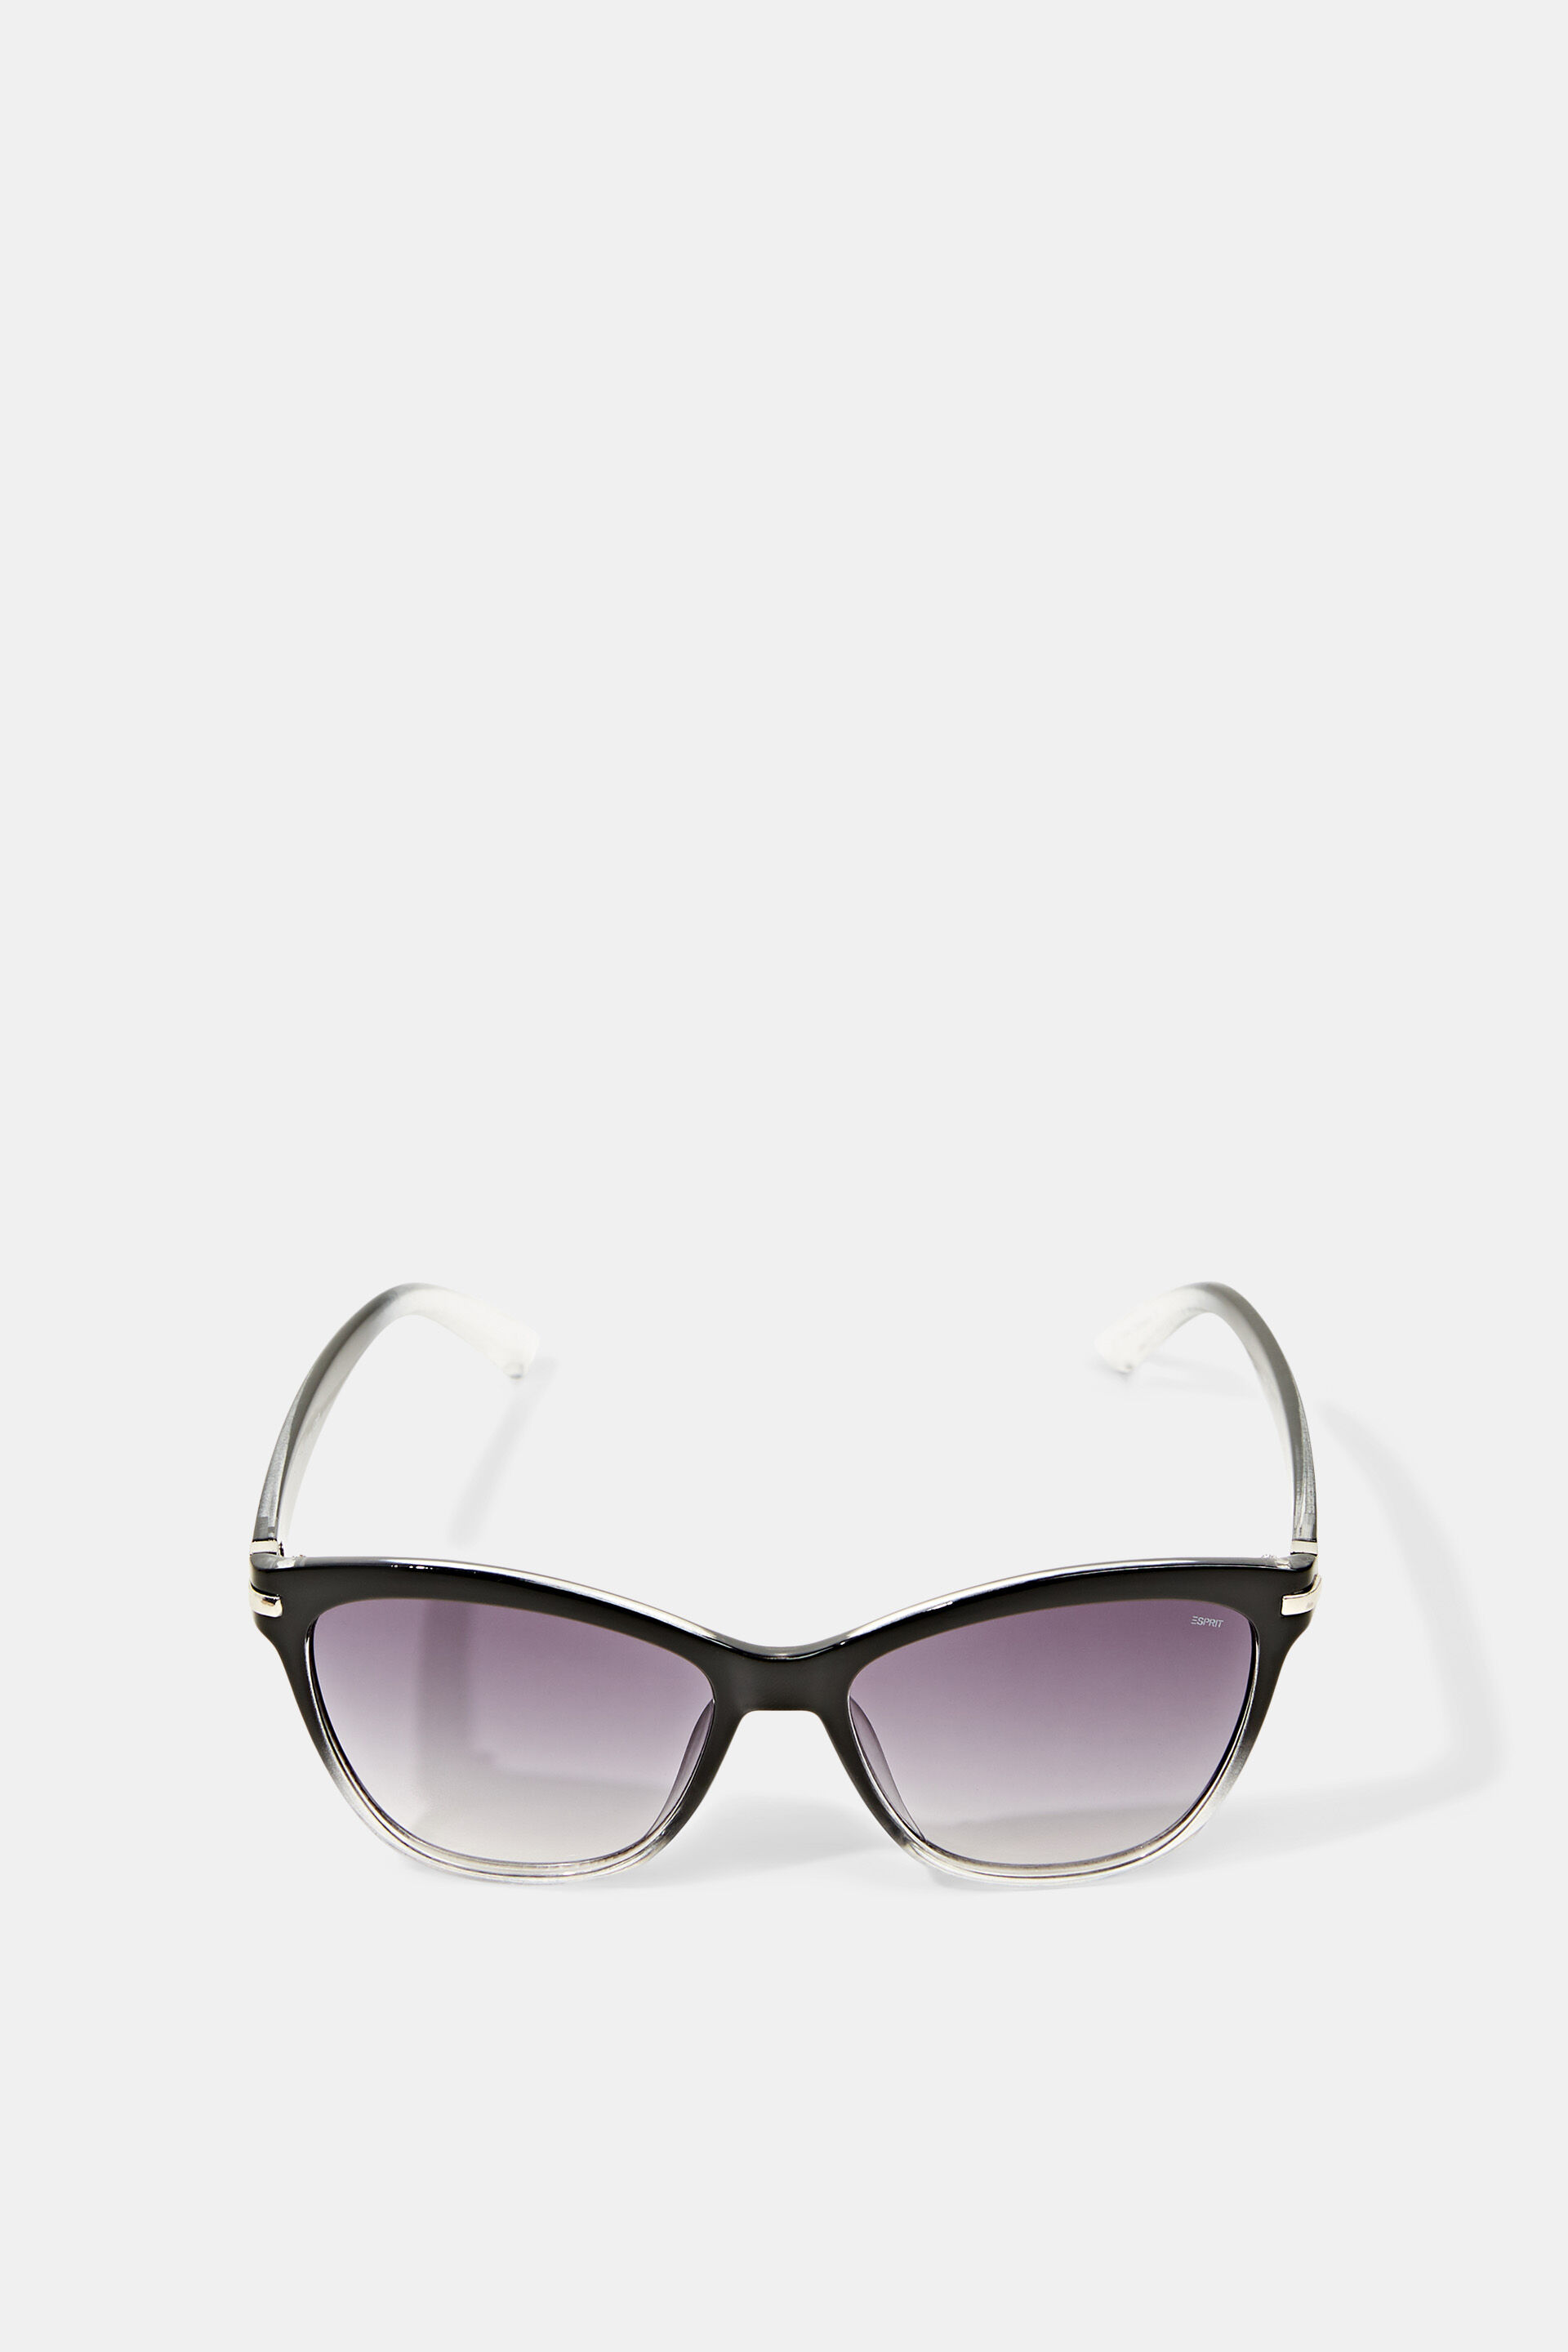 Esprit Online Store Sunglasses with metal details